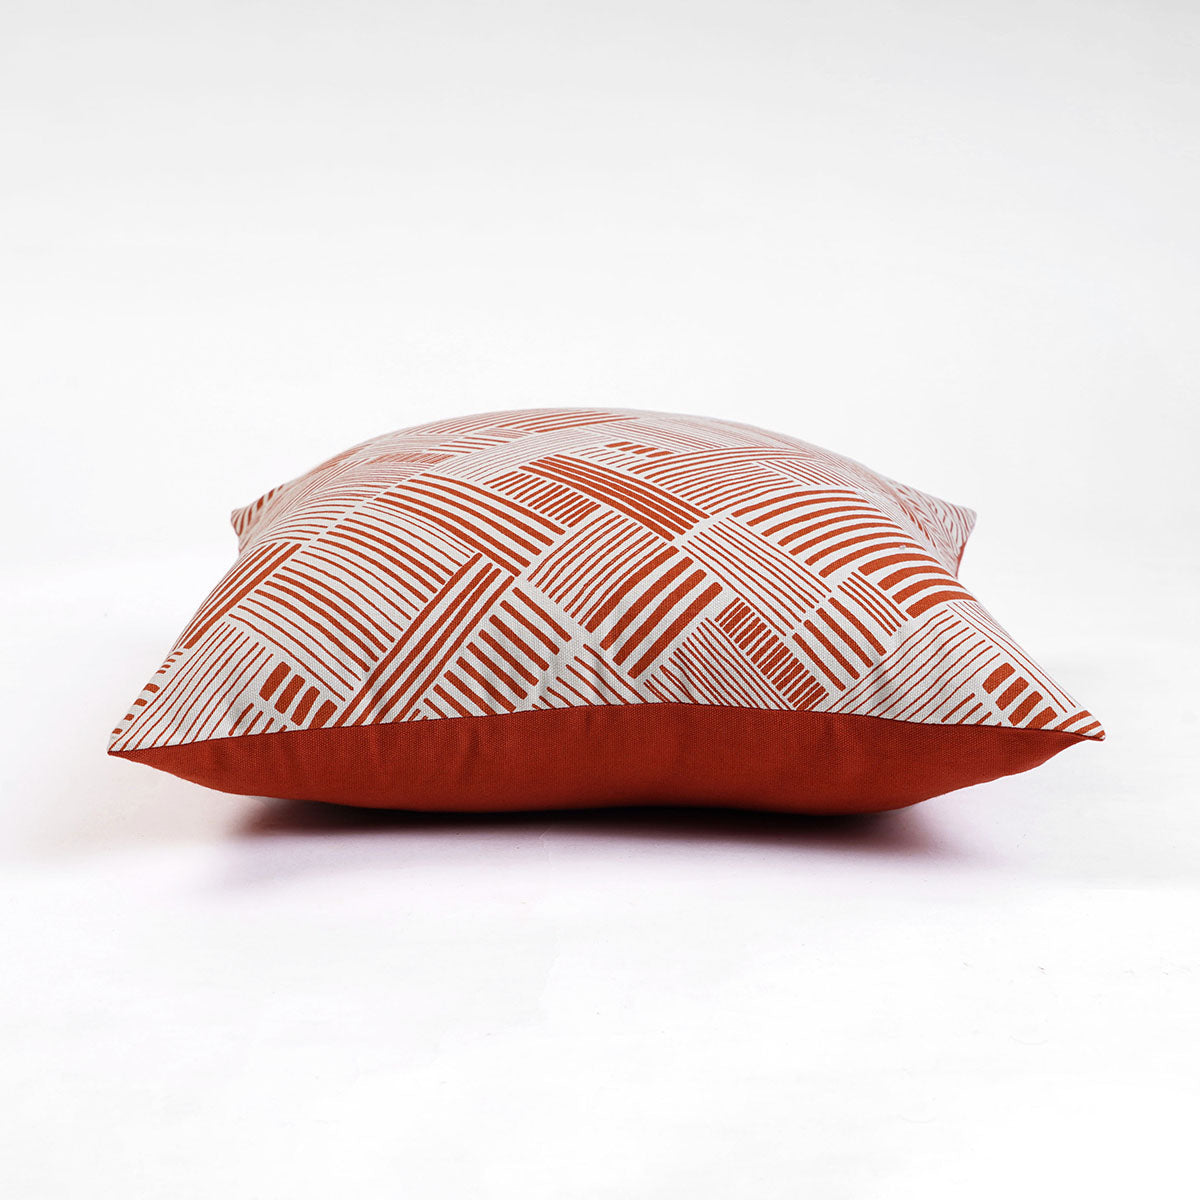 MODERN RETRO - Terracotta throw pillow cover, geometrical print, cotton pillow, sizes available.